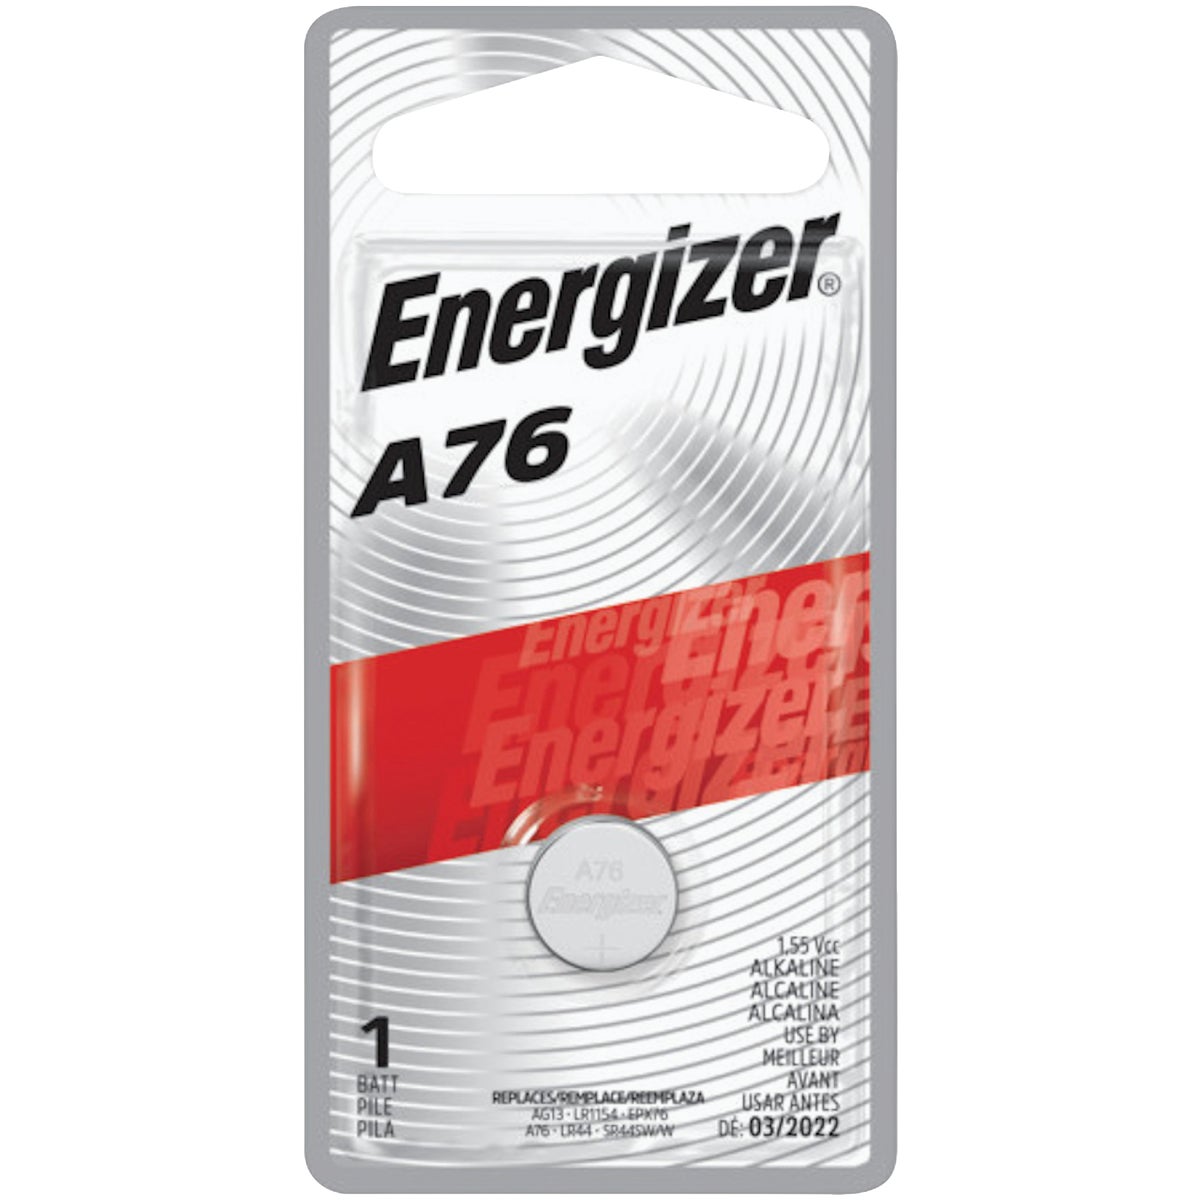 Energizer A76 Alkaline Button Battery